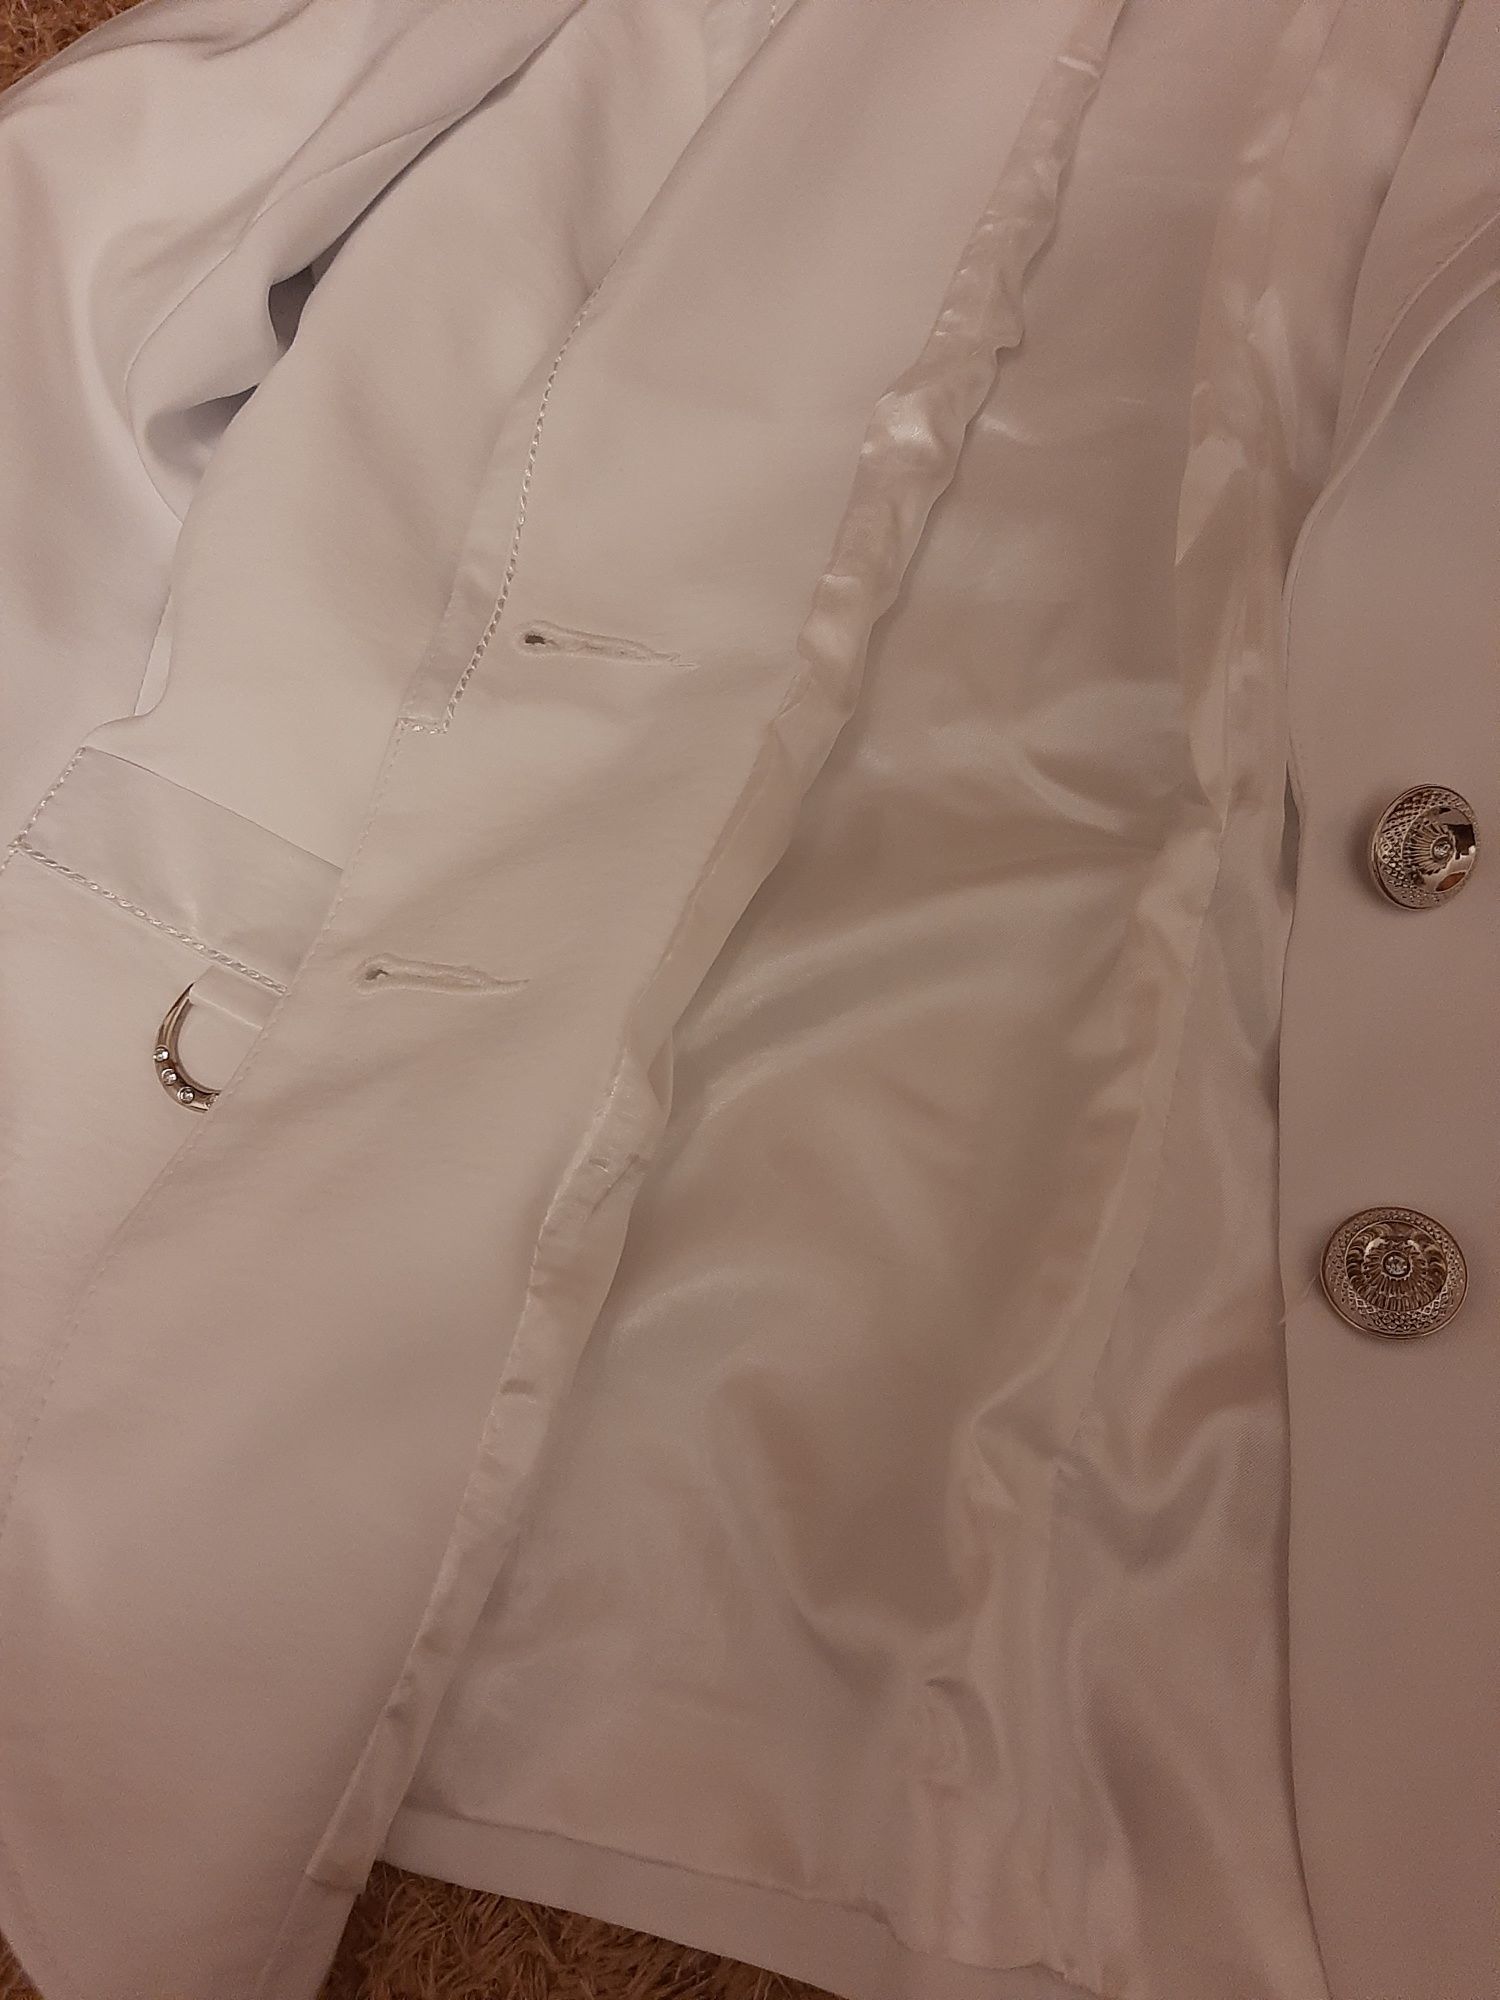 Conjunto branco cerimónia:calças,top,saia,casaco